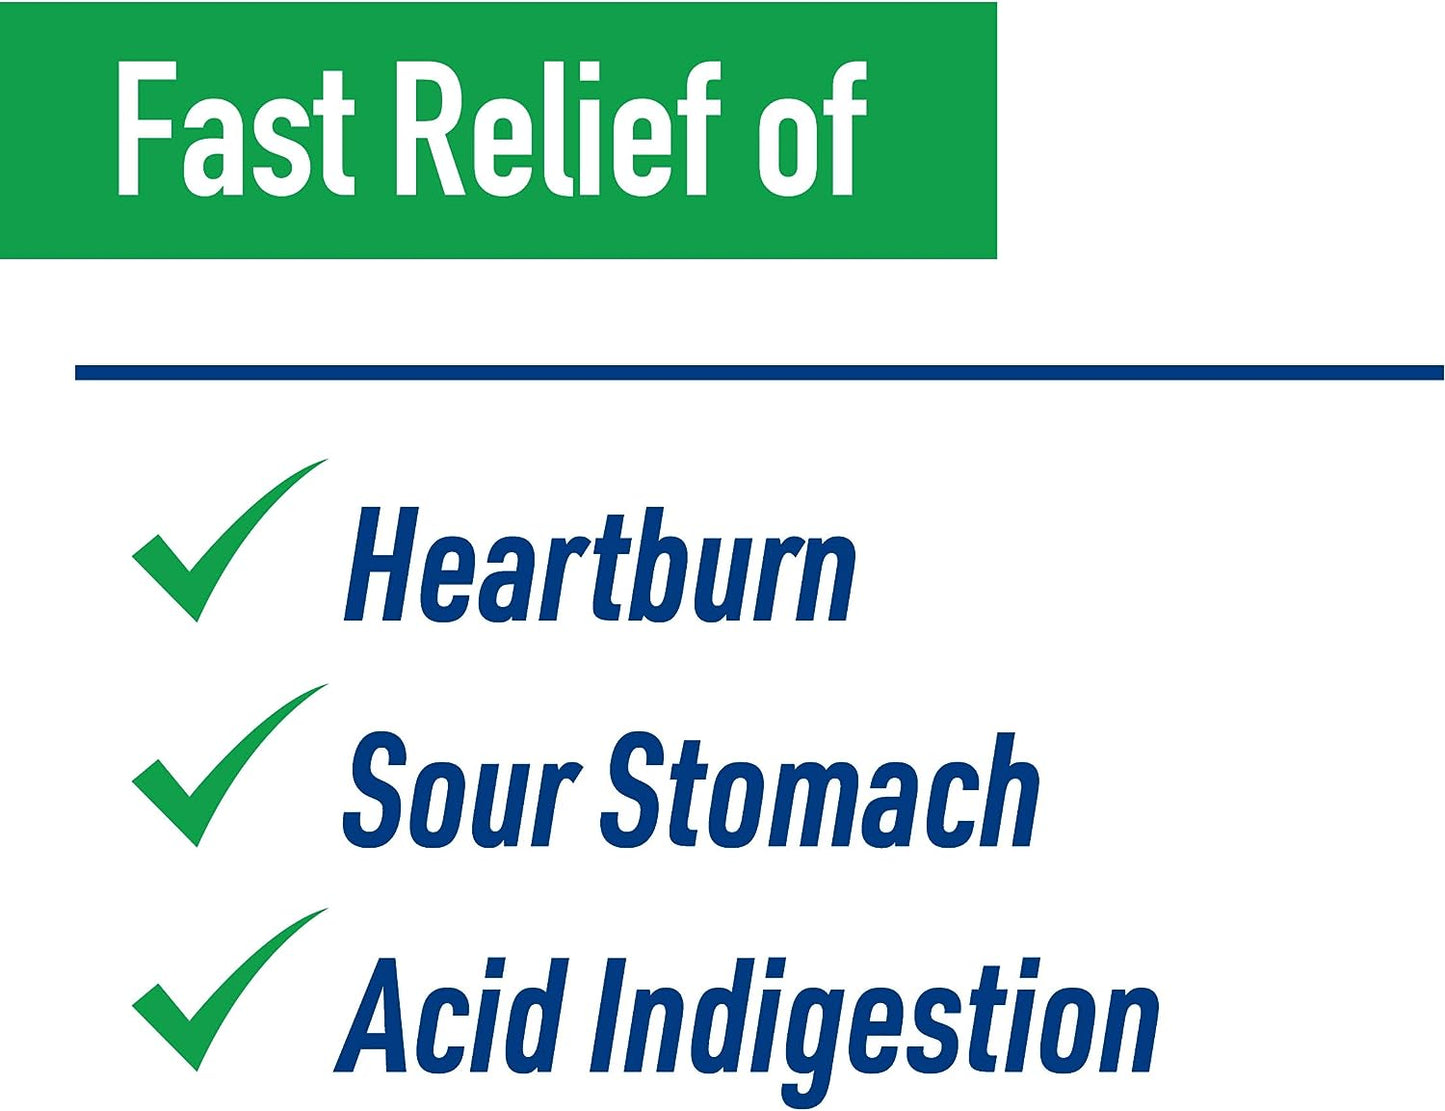 Alka-Seltzer Extra Strength Heartburn Fruit Antacid Relief Chews 200 Count